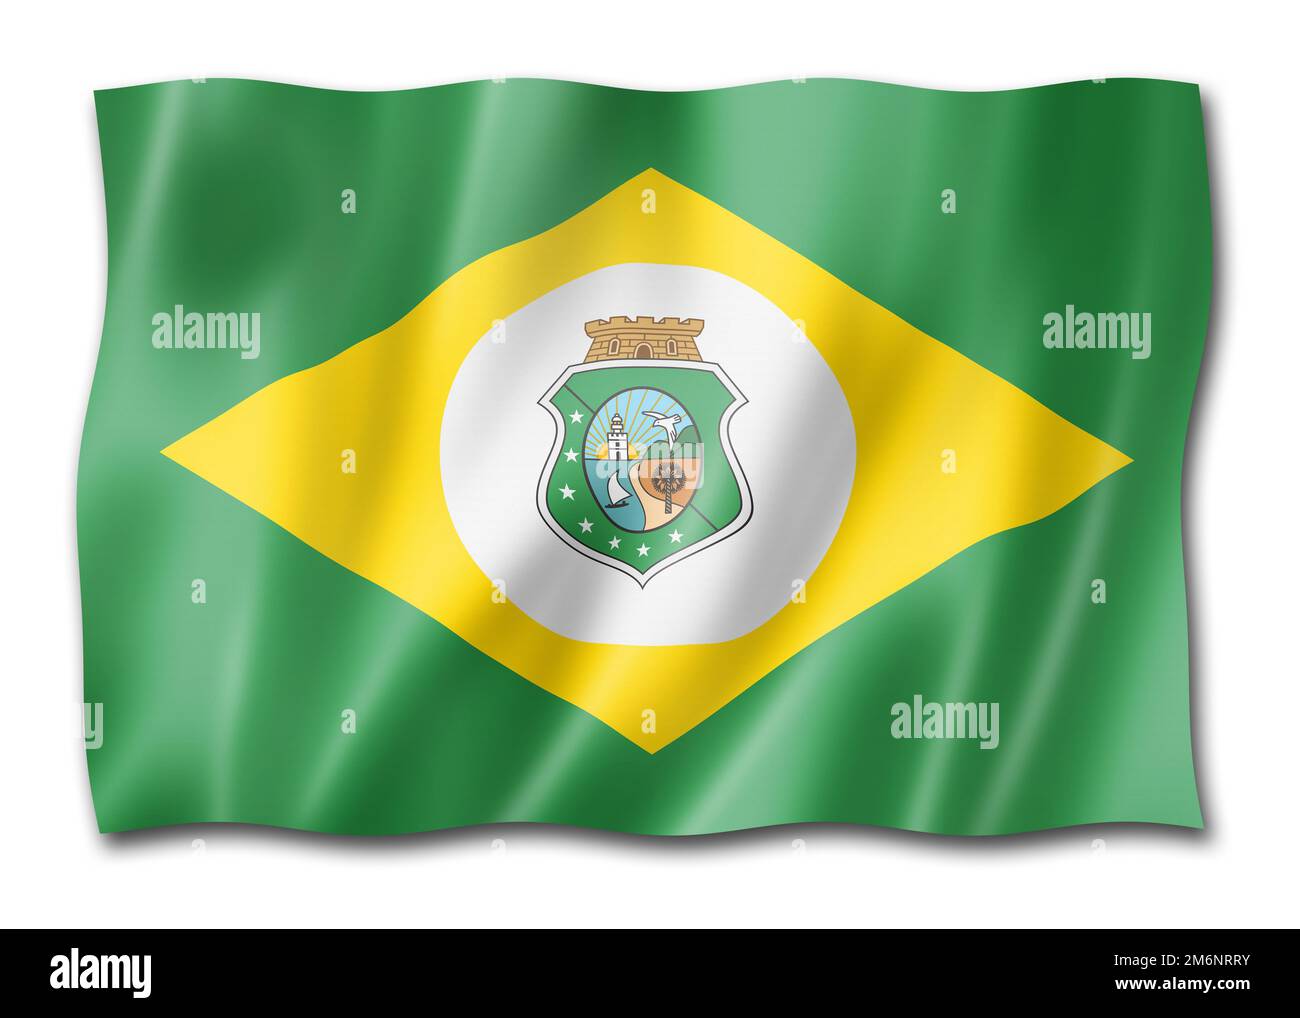 Ceara state flag, Brazil Stock Photo